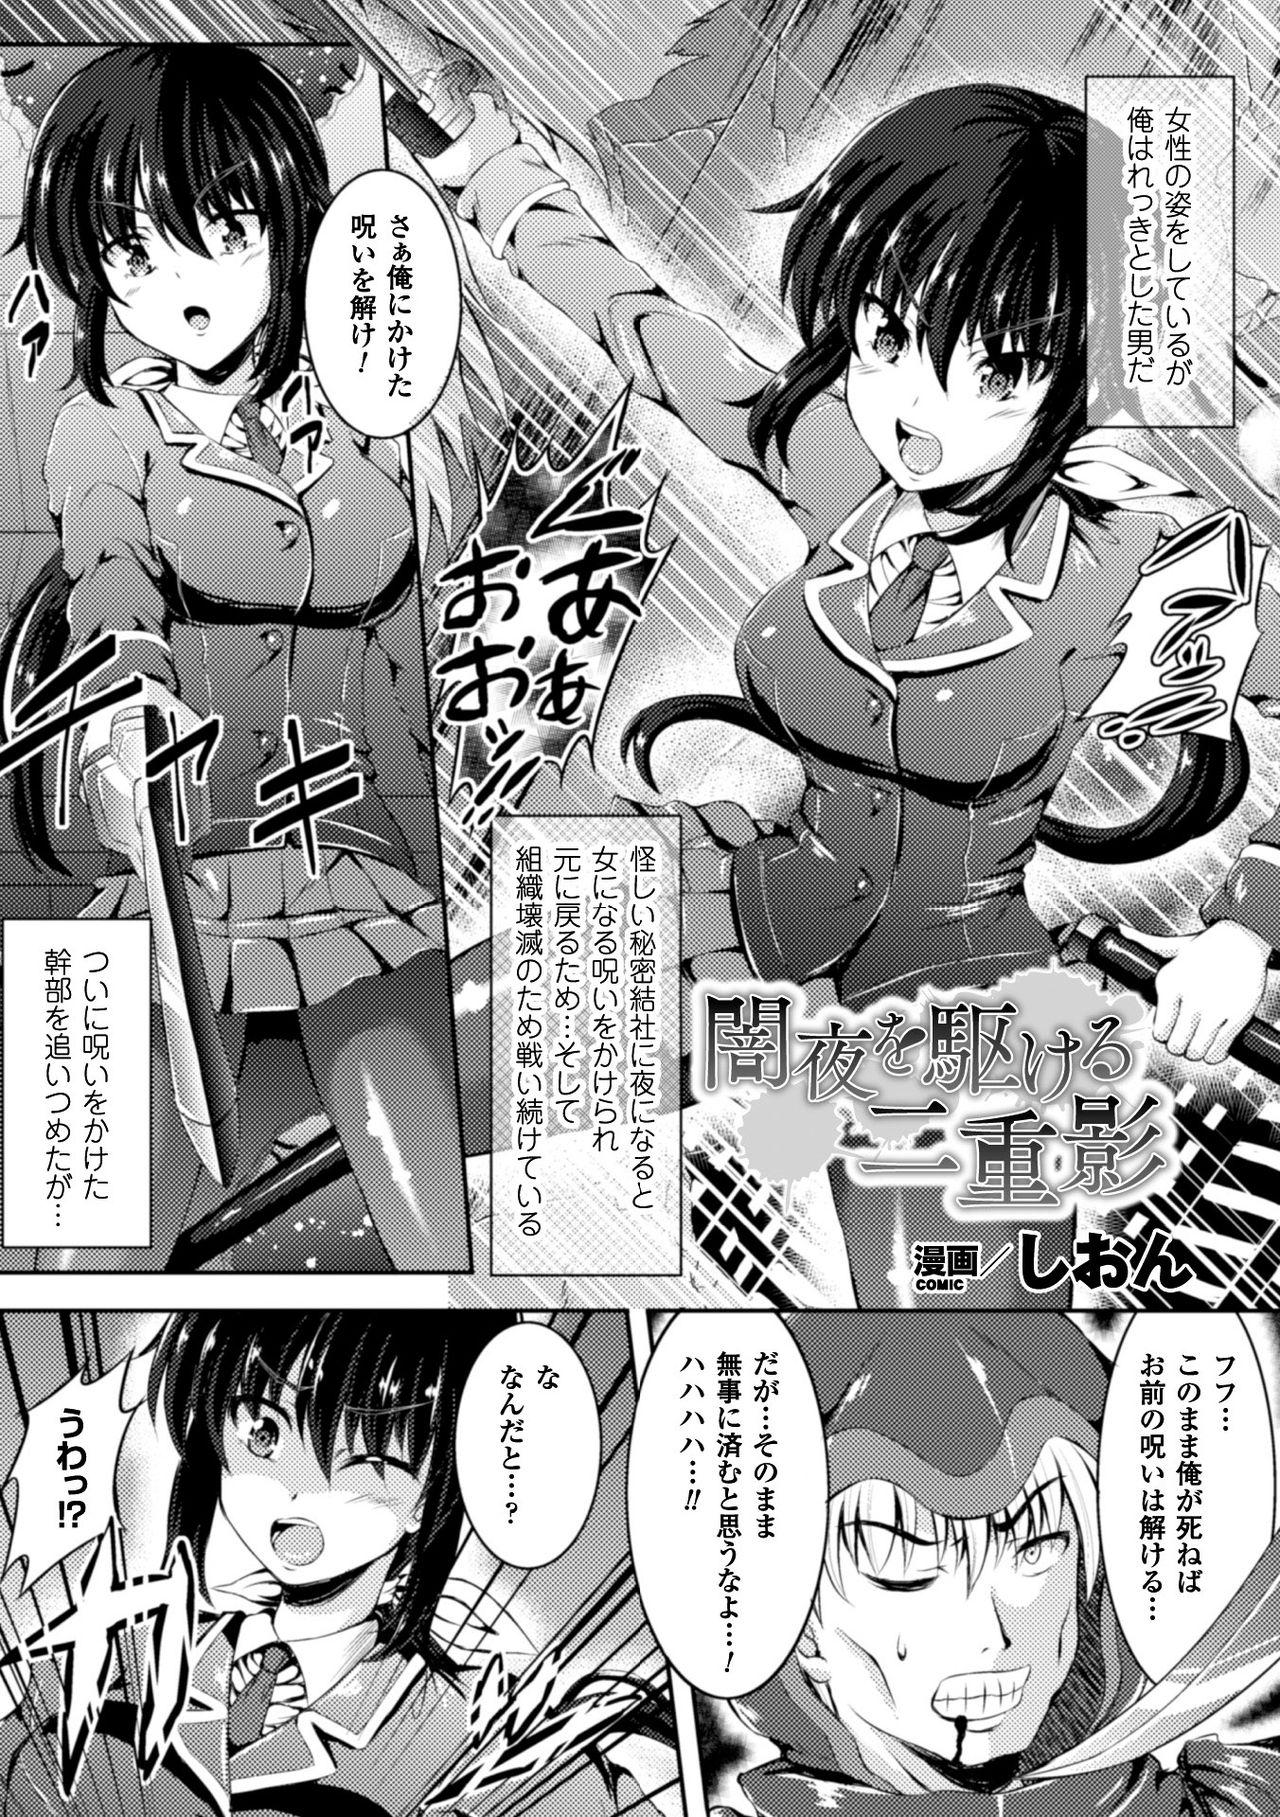 Fisting 2D Comic Magazine TS Jibun Heroine mou Hitori no Ore ga Erosugite Gaman Dekinee! Vol. 1 Bubblebutt - Page 3